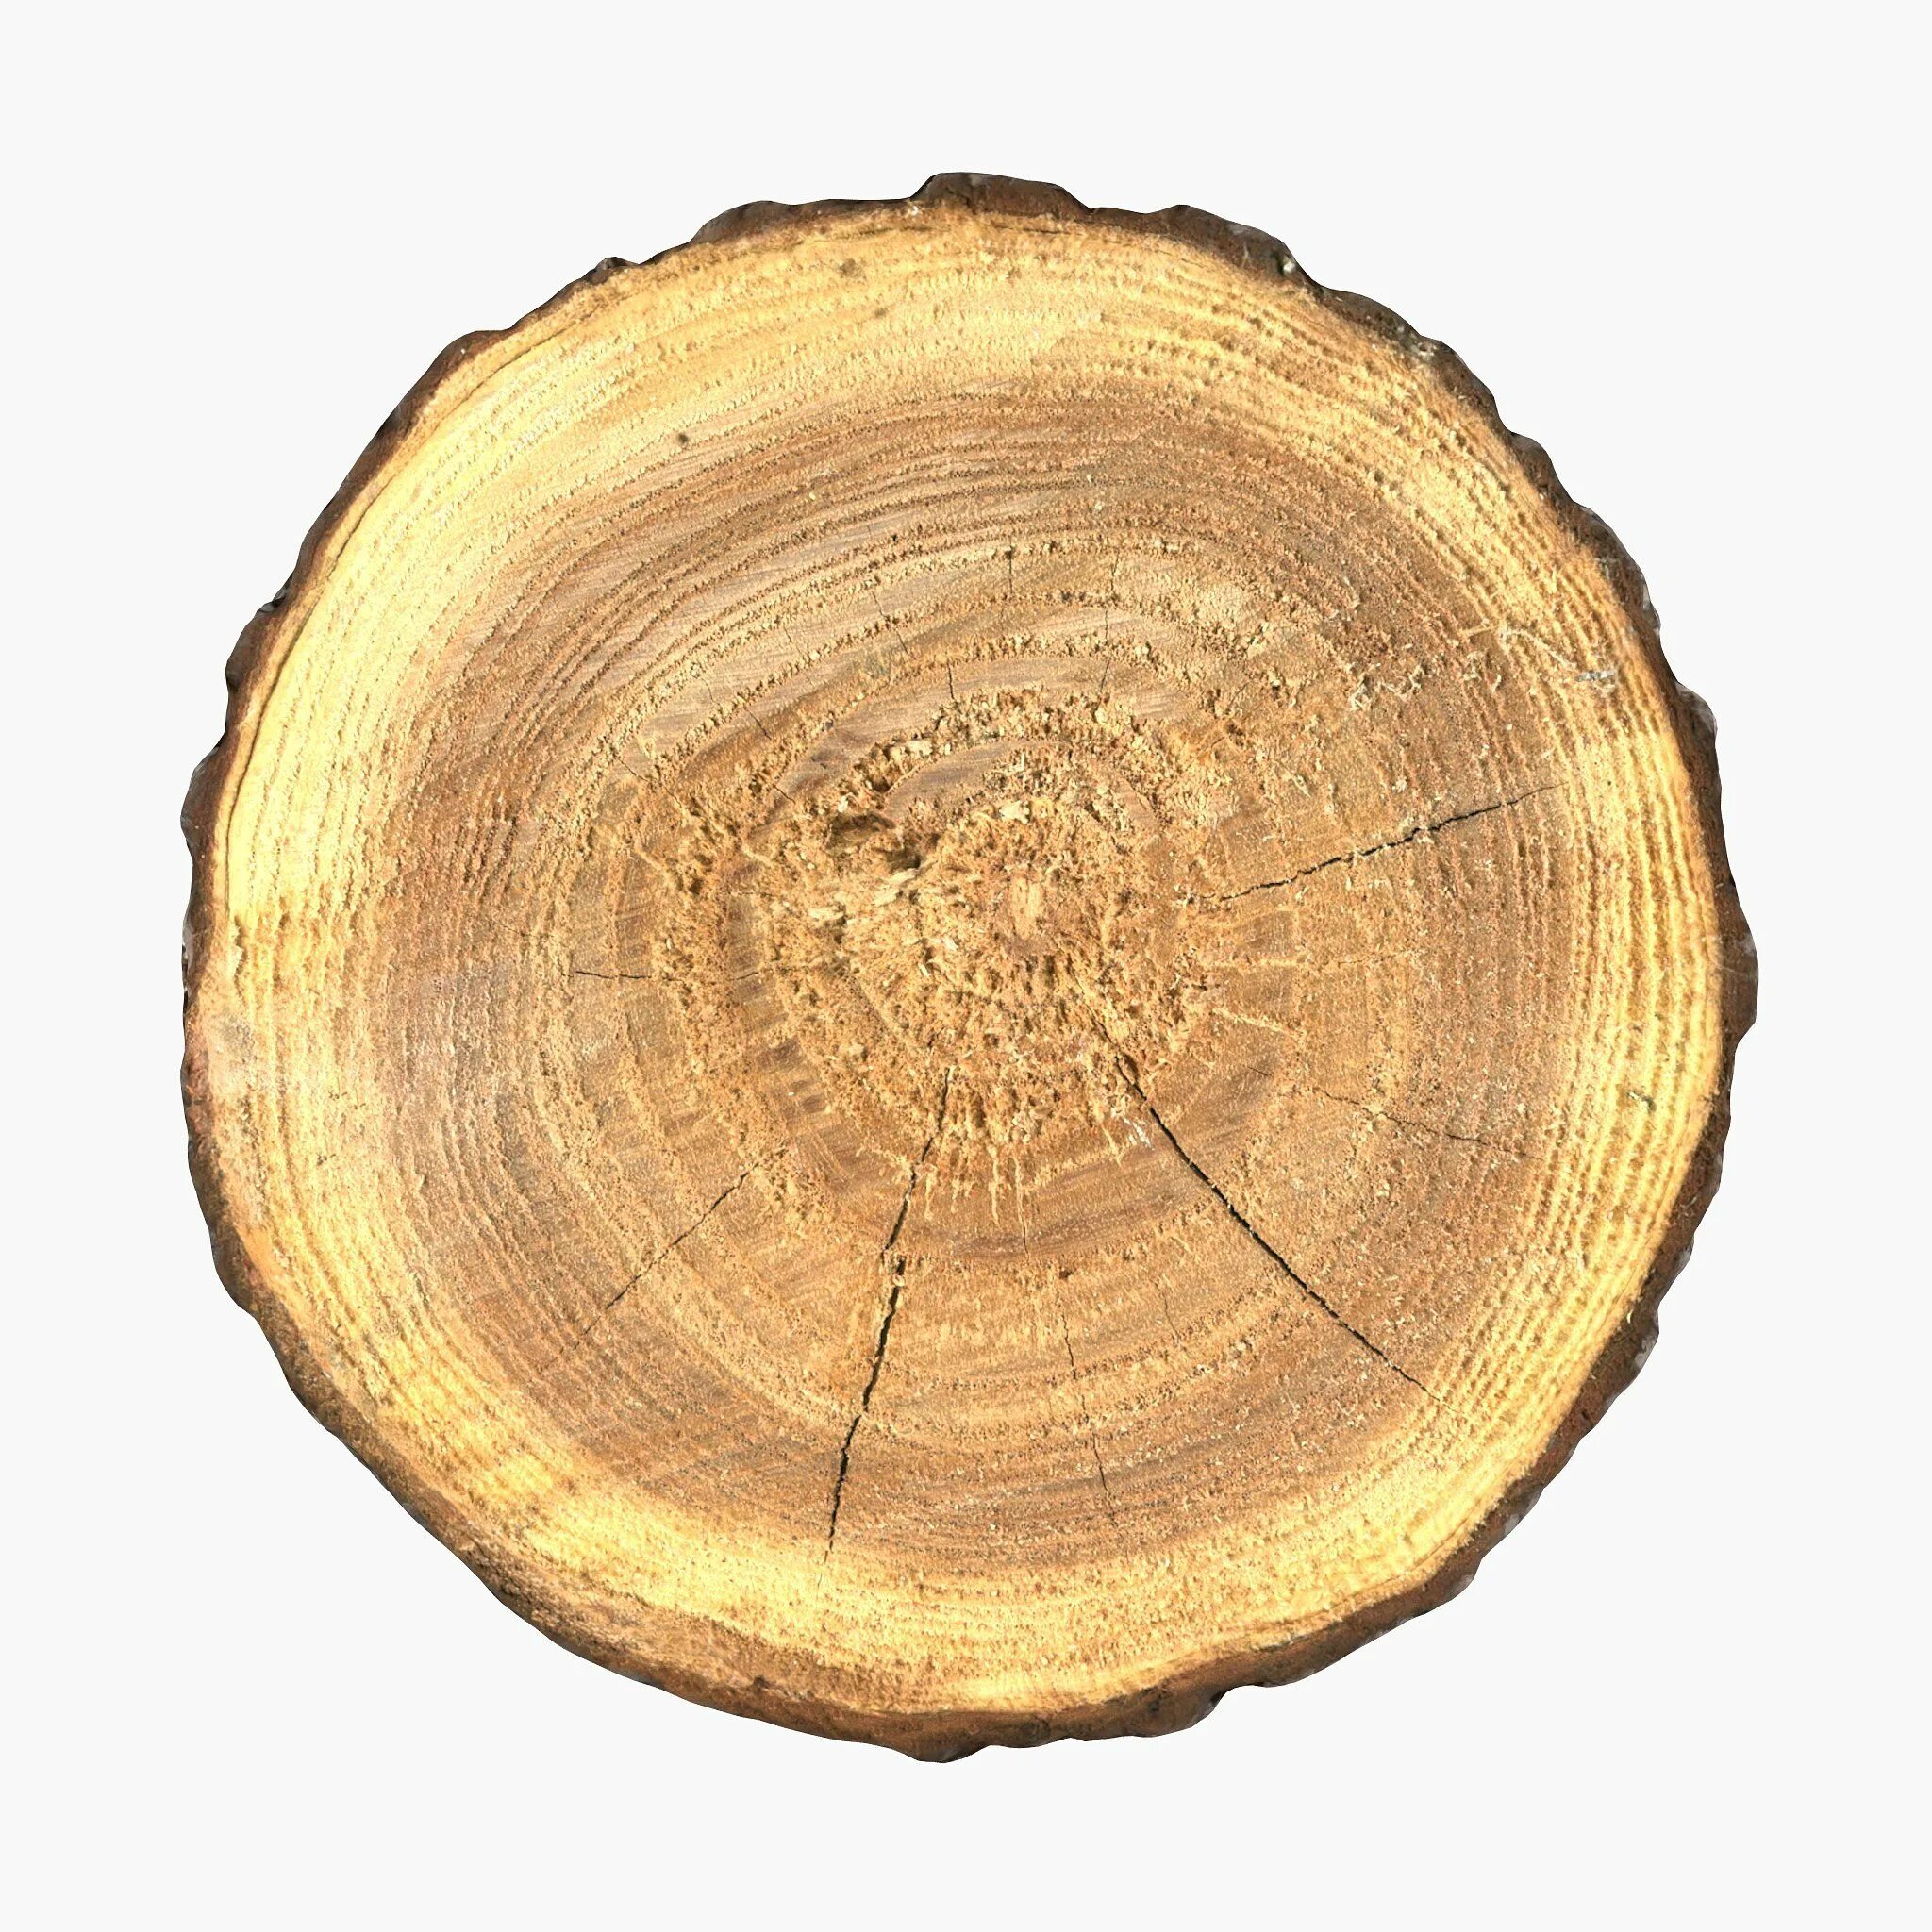 T me buy logs. Срез дерева. Круглый кусок дерева. Срез дерева текстура. Плоский кусок дерева.